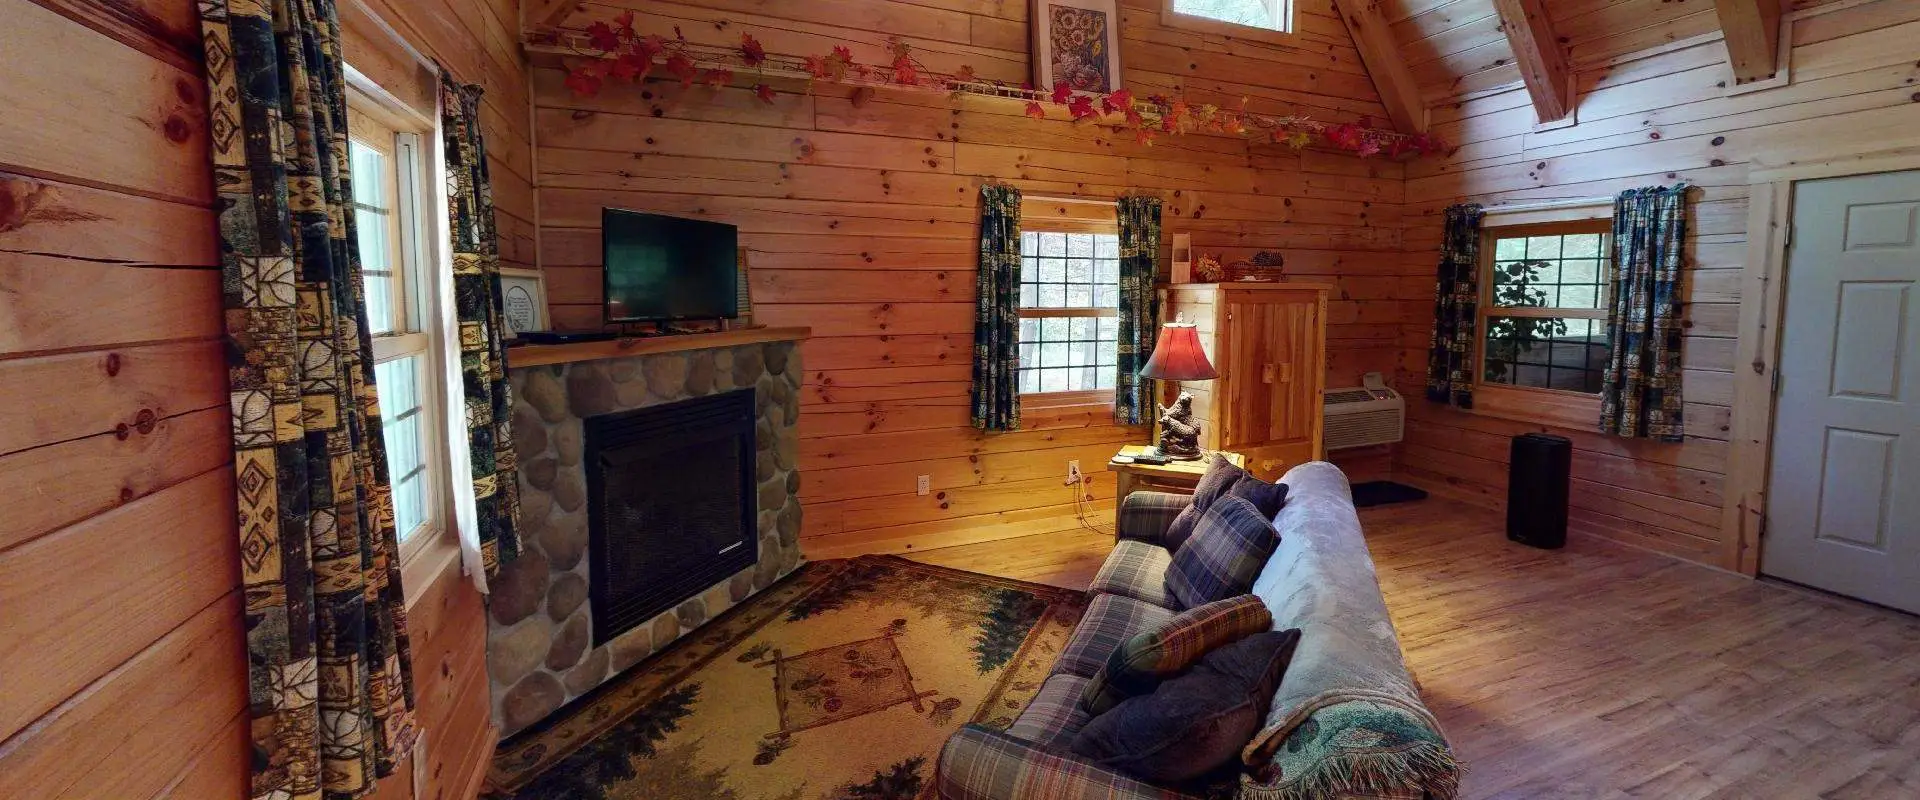 Dogwood Cabin Inside